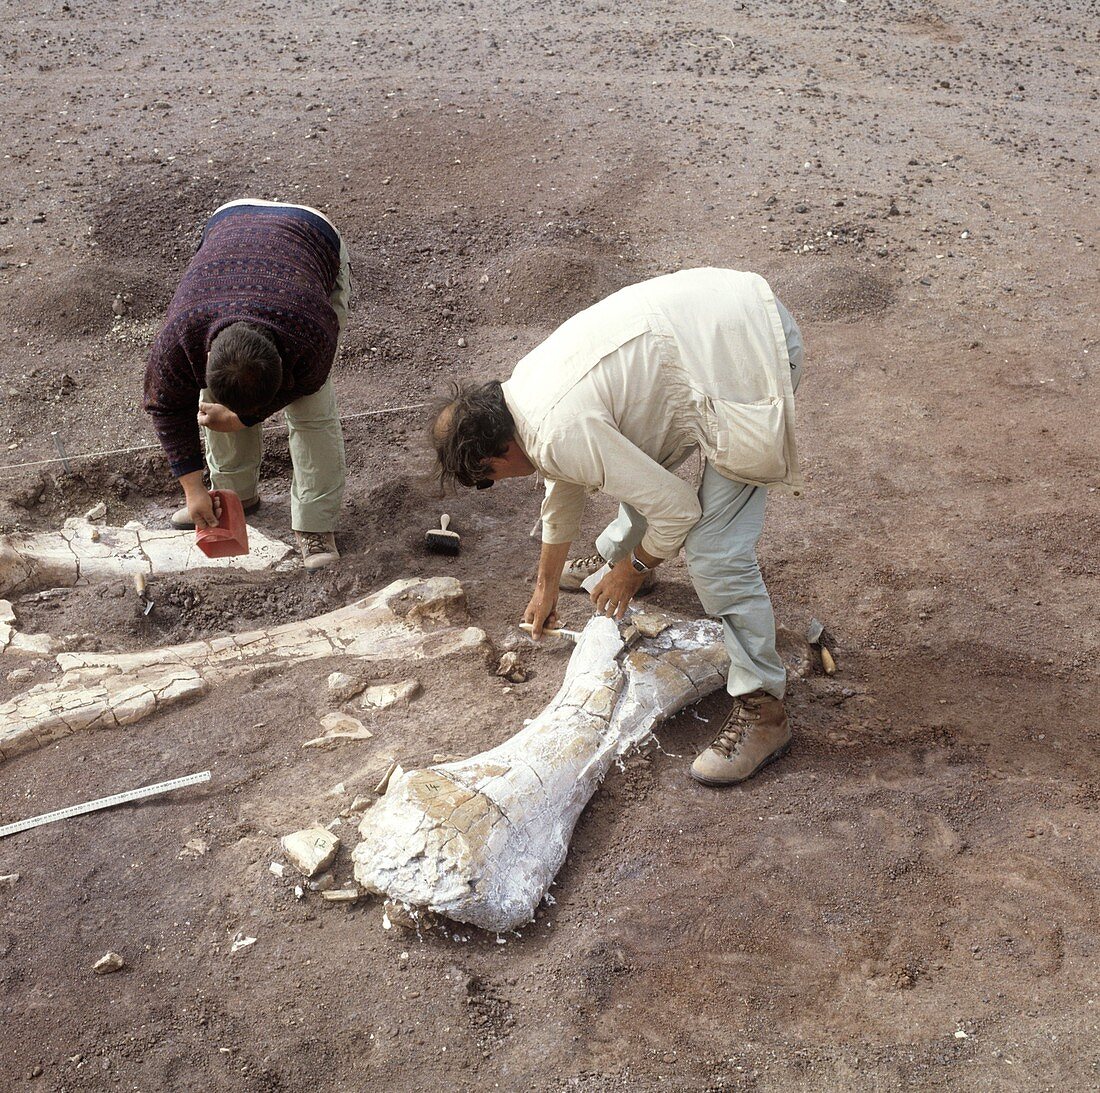 Rebbachisaurus fossil excavation,1988